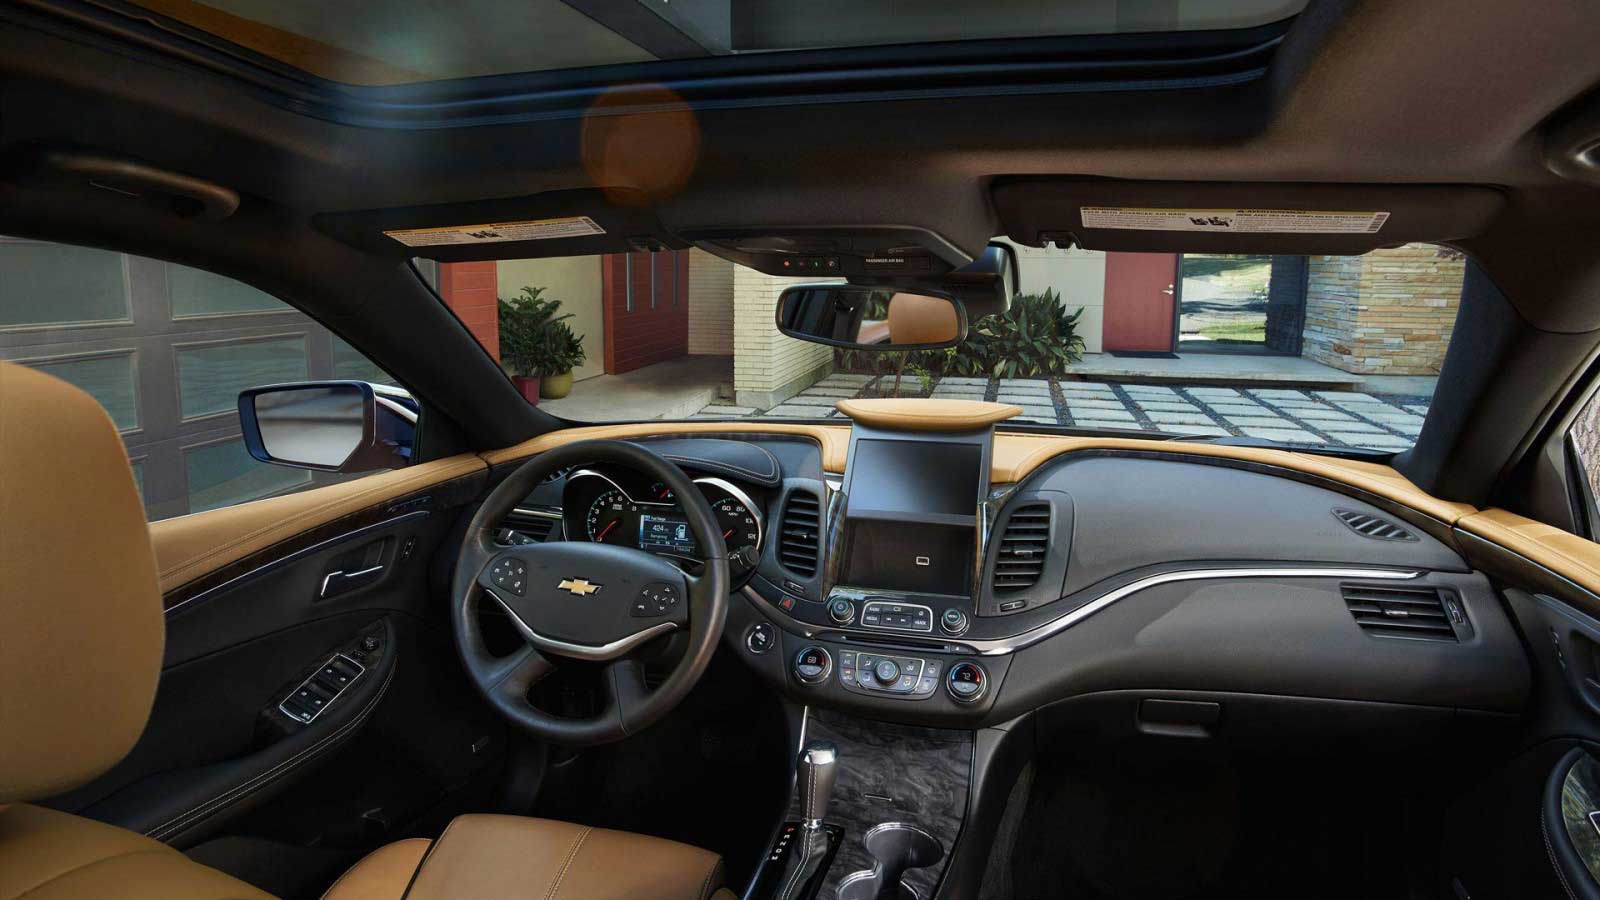 Chevrolet Impala LS Interior front view